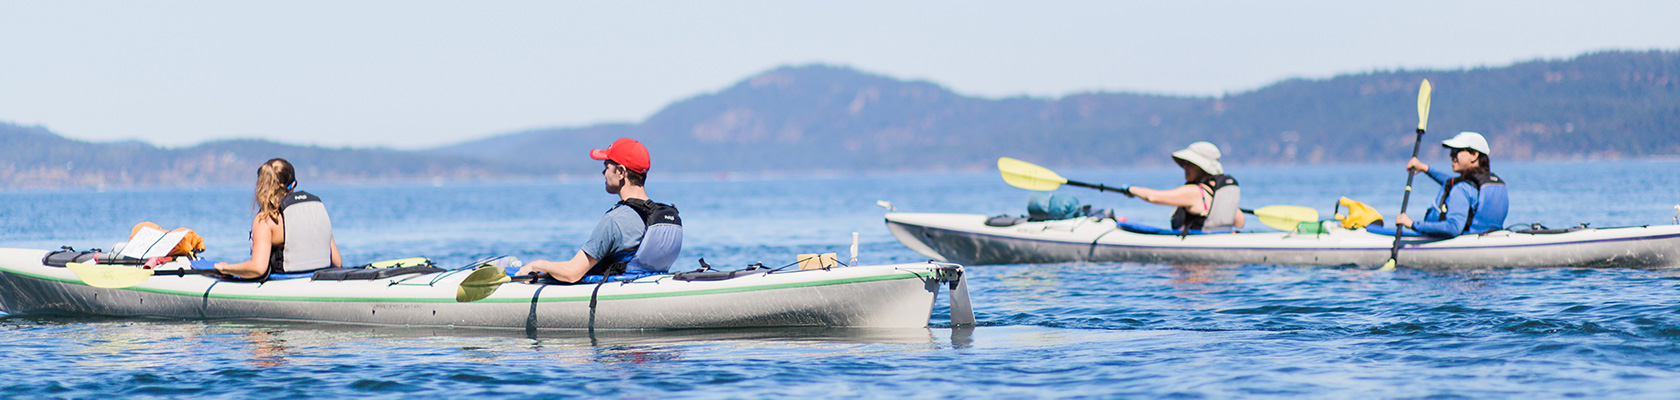 kayaking on calm seas in the San Juan Islands